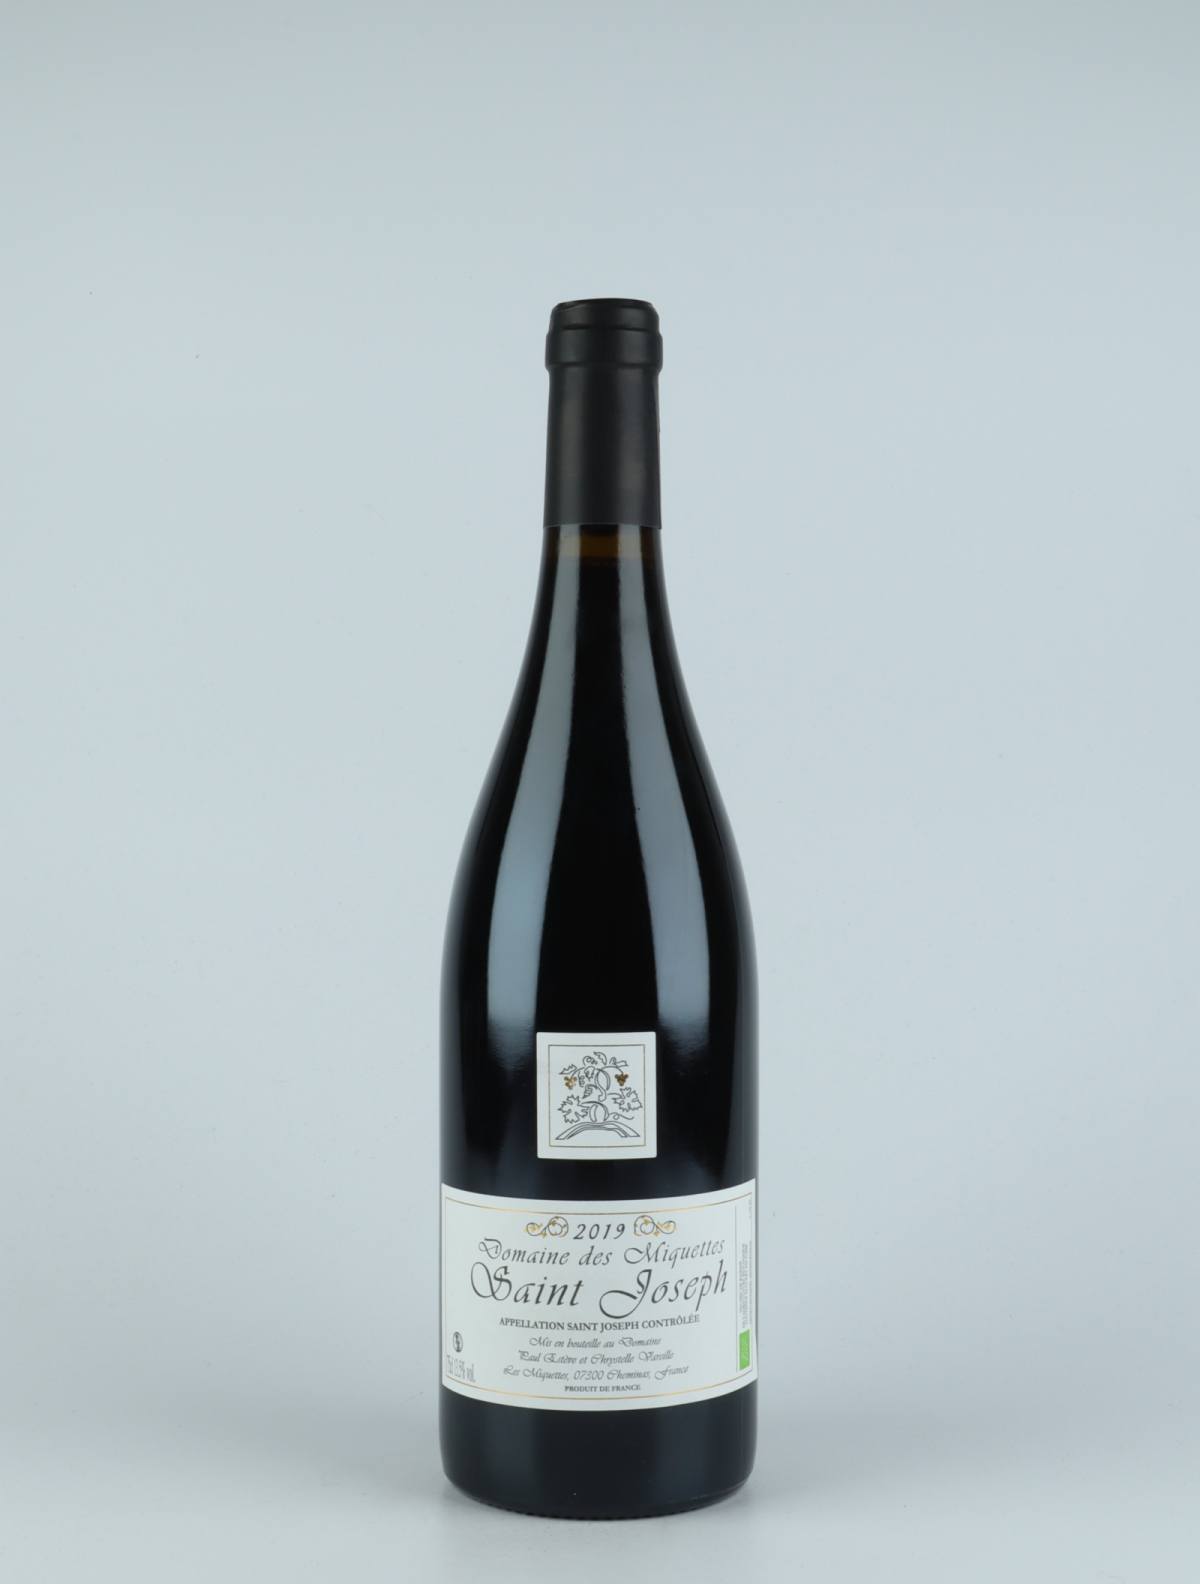 A bottle 2019 Saint-Joseph Rouge Red wine from Domaine des Miquettes, Rhône in France